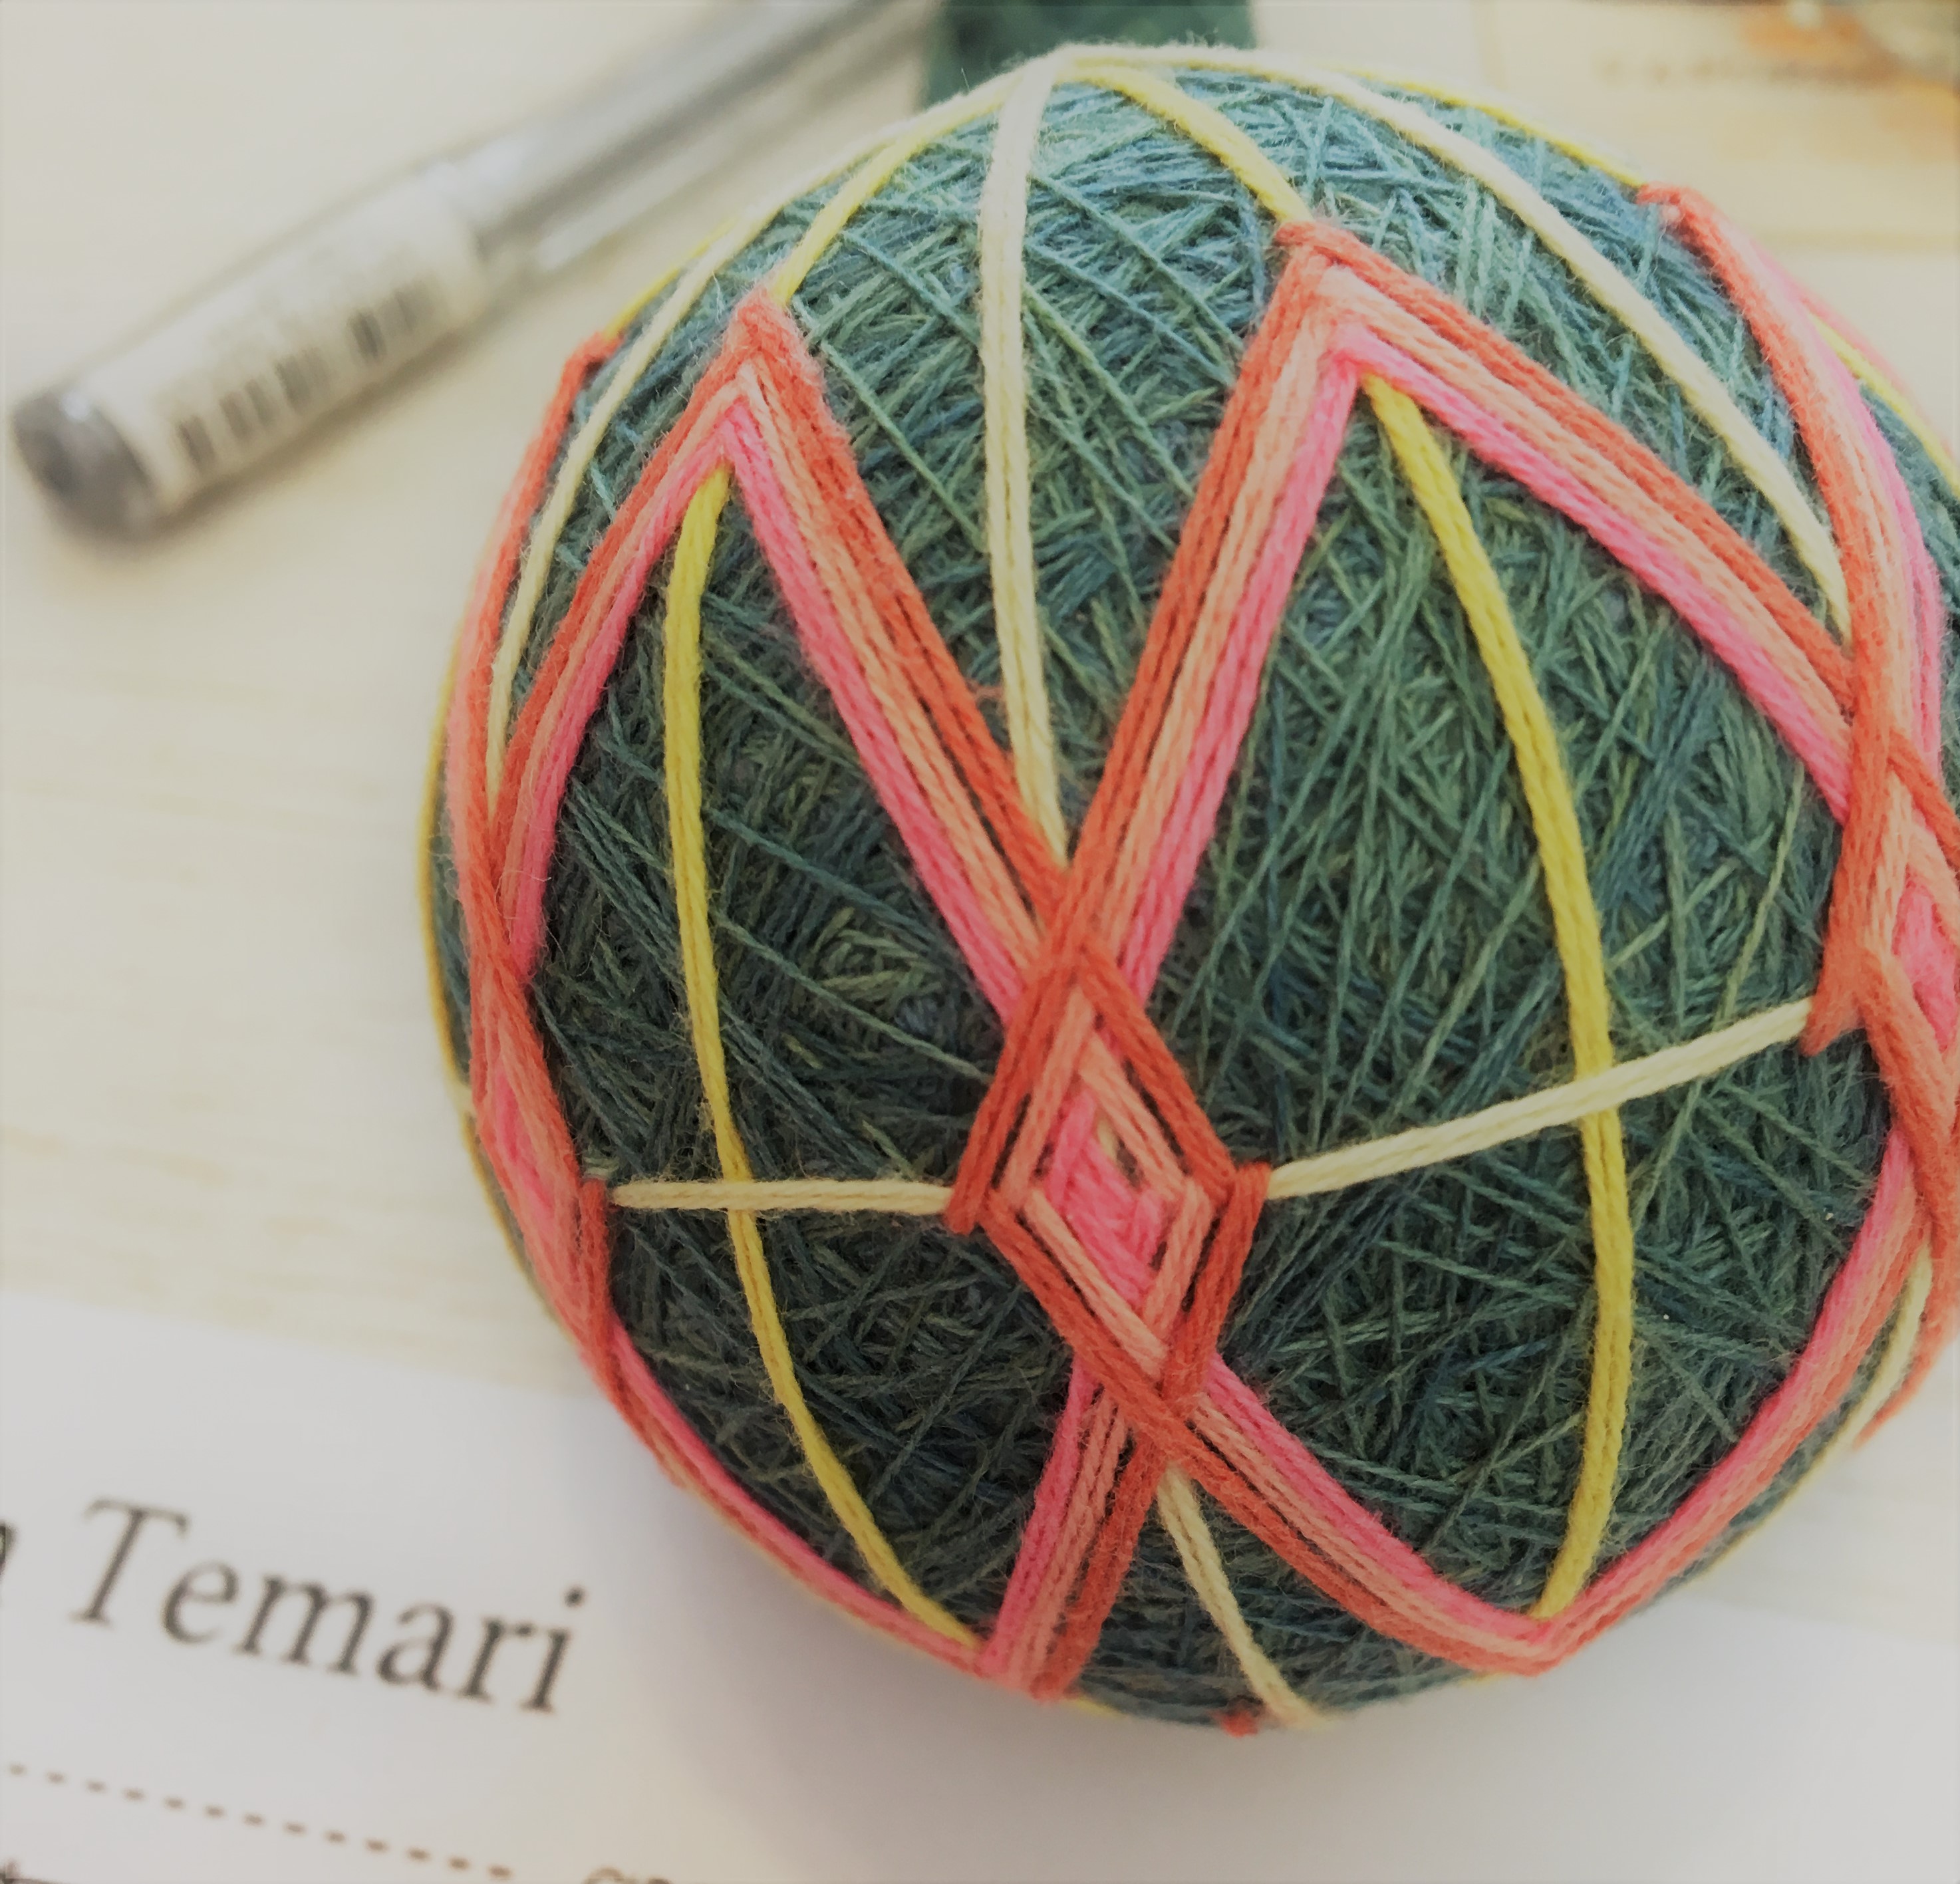 Naturally Coloured Temari